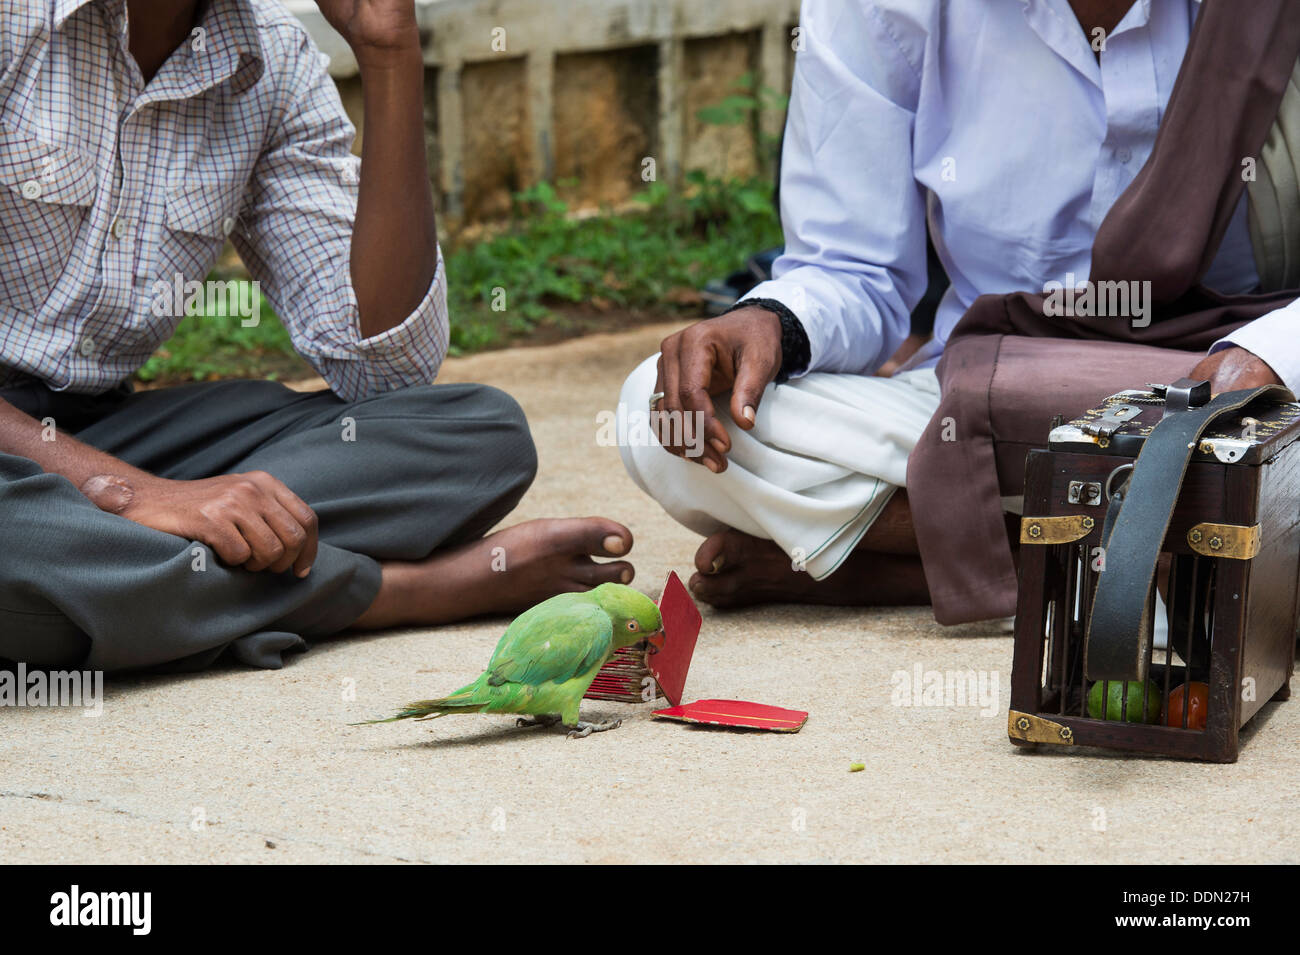 Parrot l'astrologie. L'astrologue indien street / Fortune Teller d'un perroquet. L'Andhra Pradesh, Inde Banque D'Images